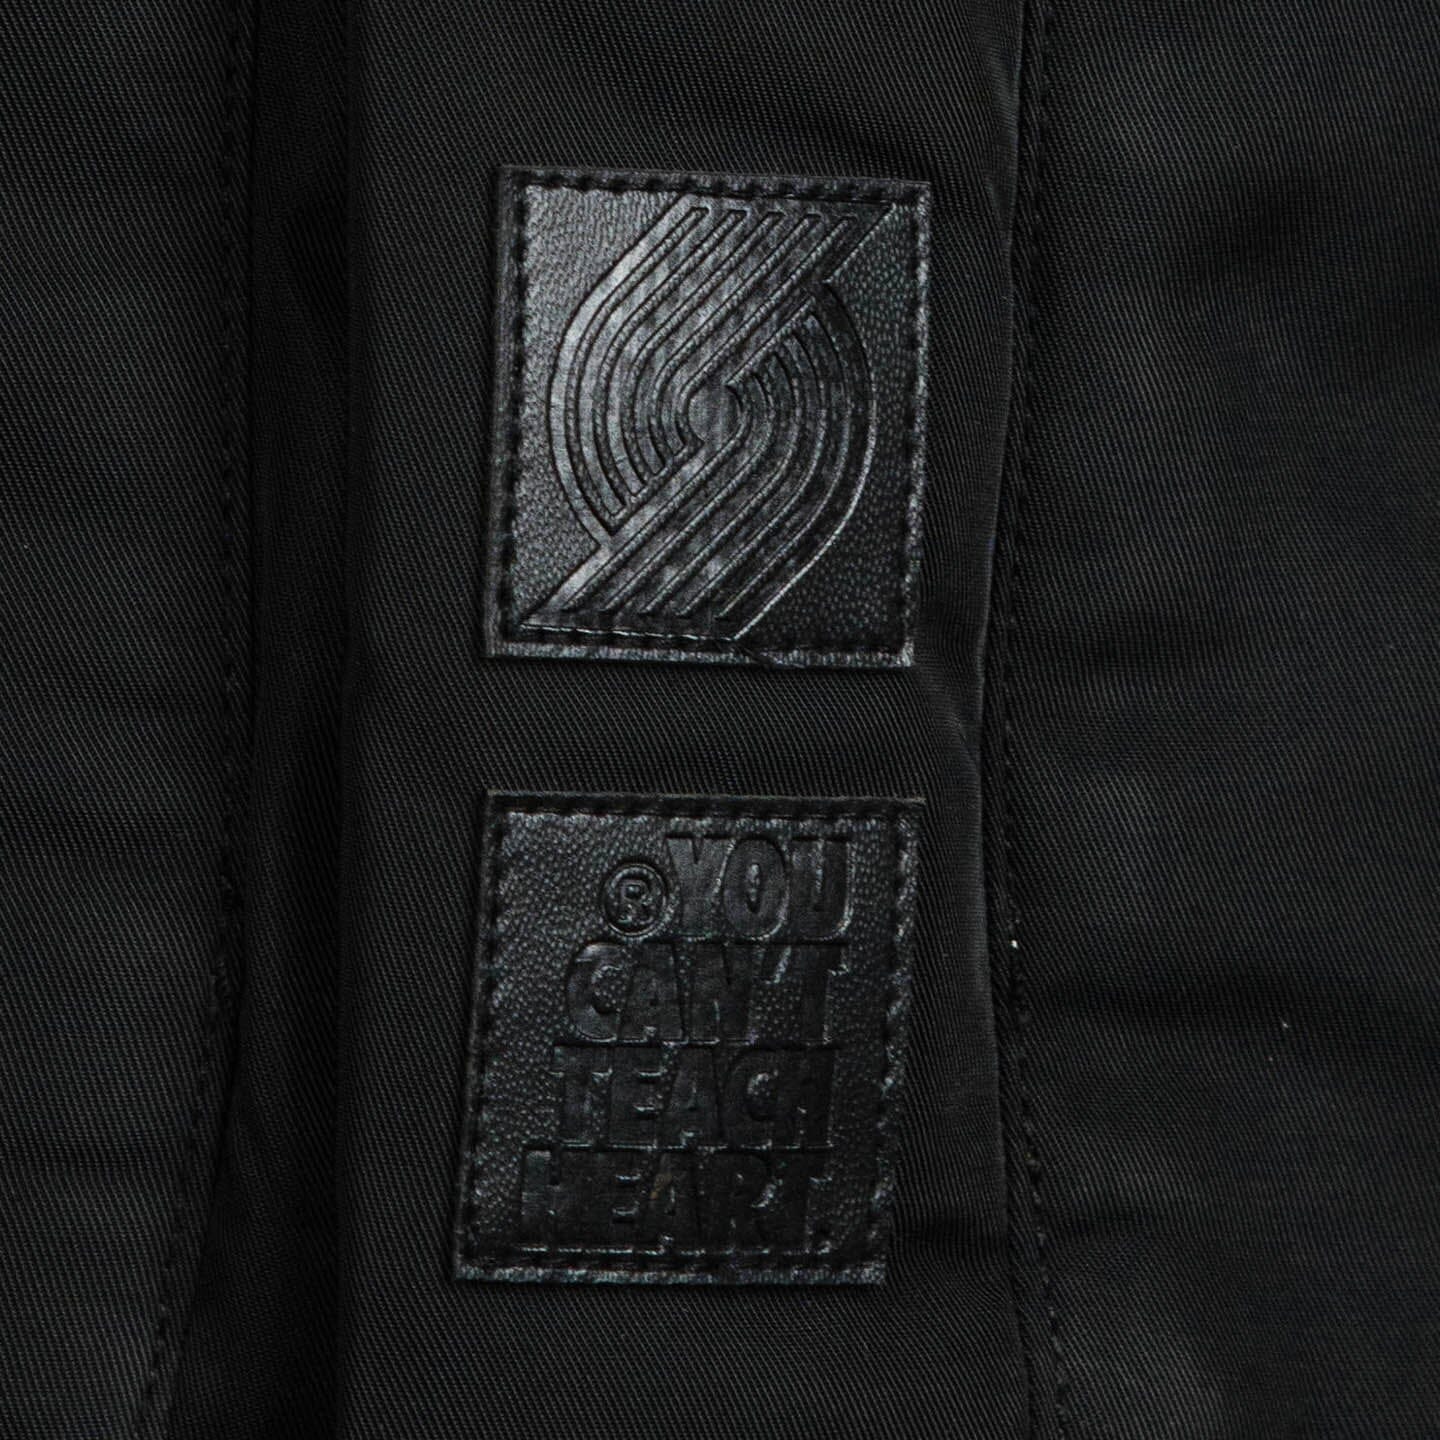 HYPERFLY + NBA Trail Blazers Jacket Apparel - Outerwear Hyperfly 